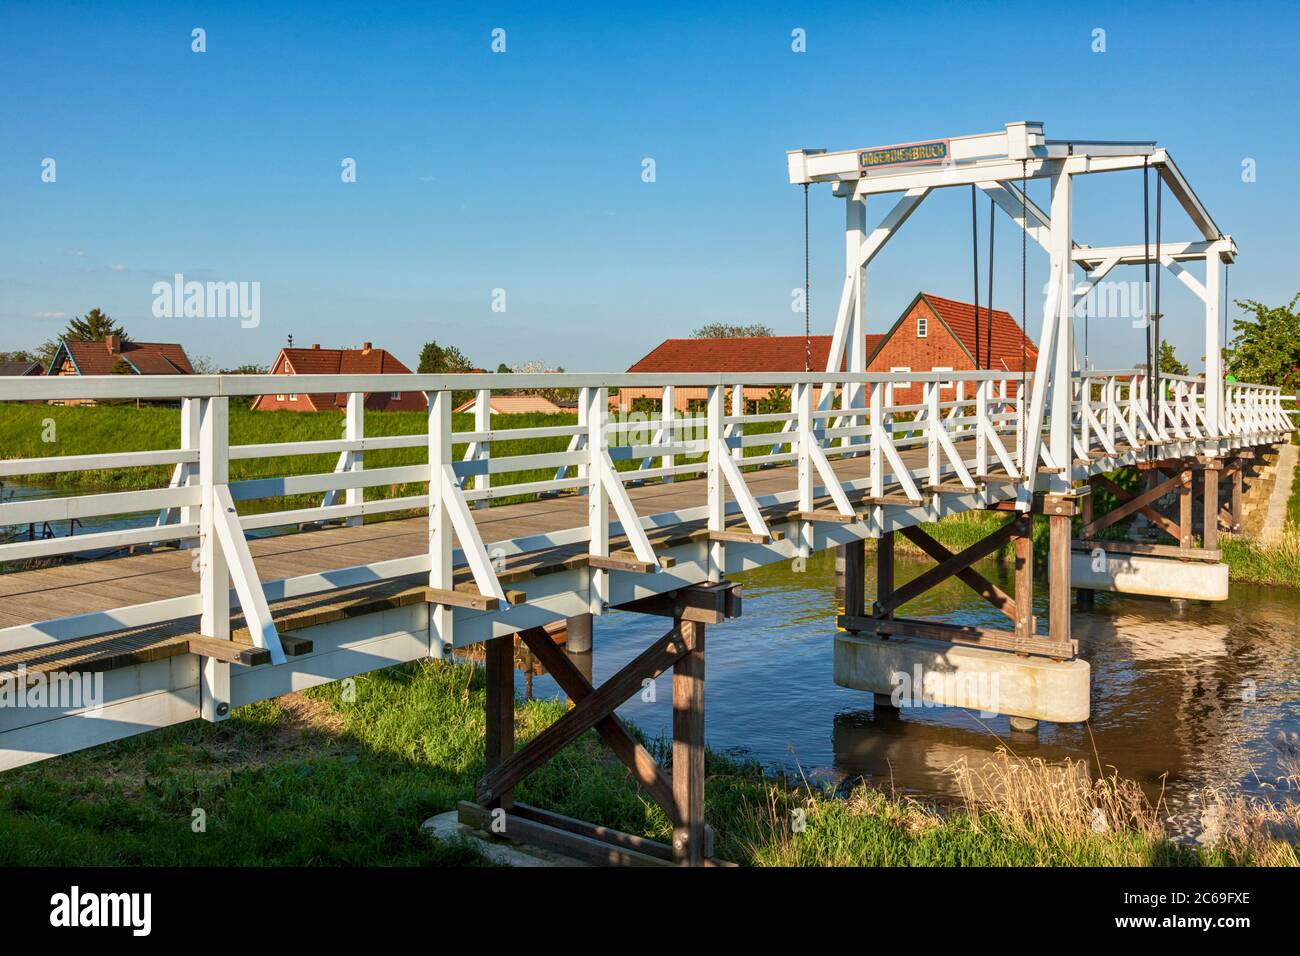 Hogendieckbrücke, bascule bridge across Lühe river at Steinkirchen, Altes Land region, Germany Stock Photo